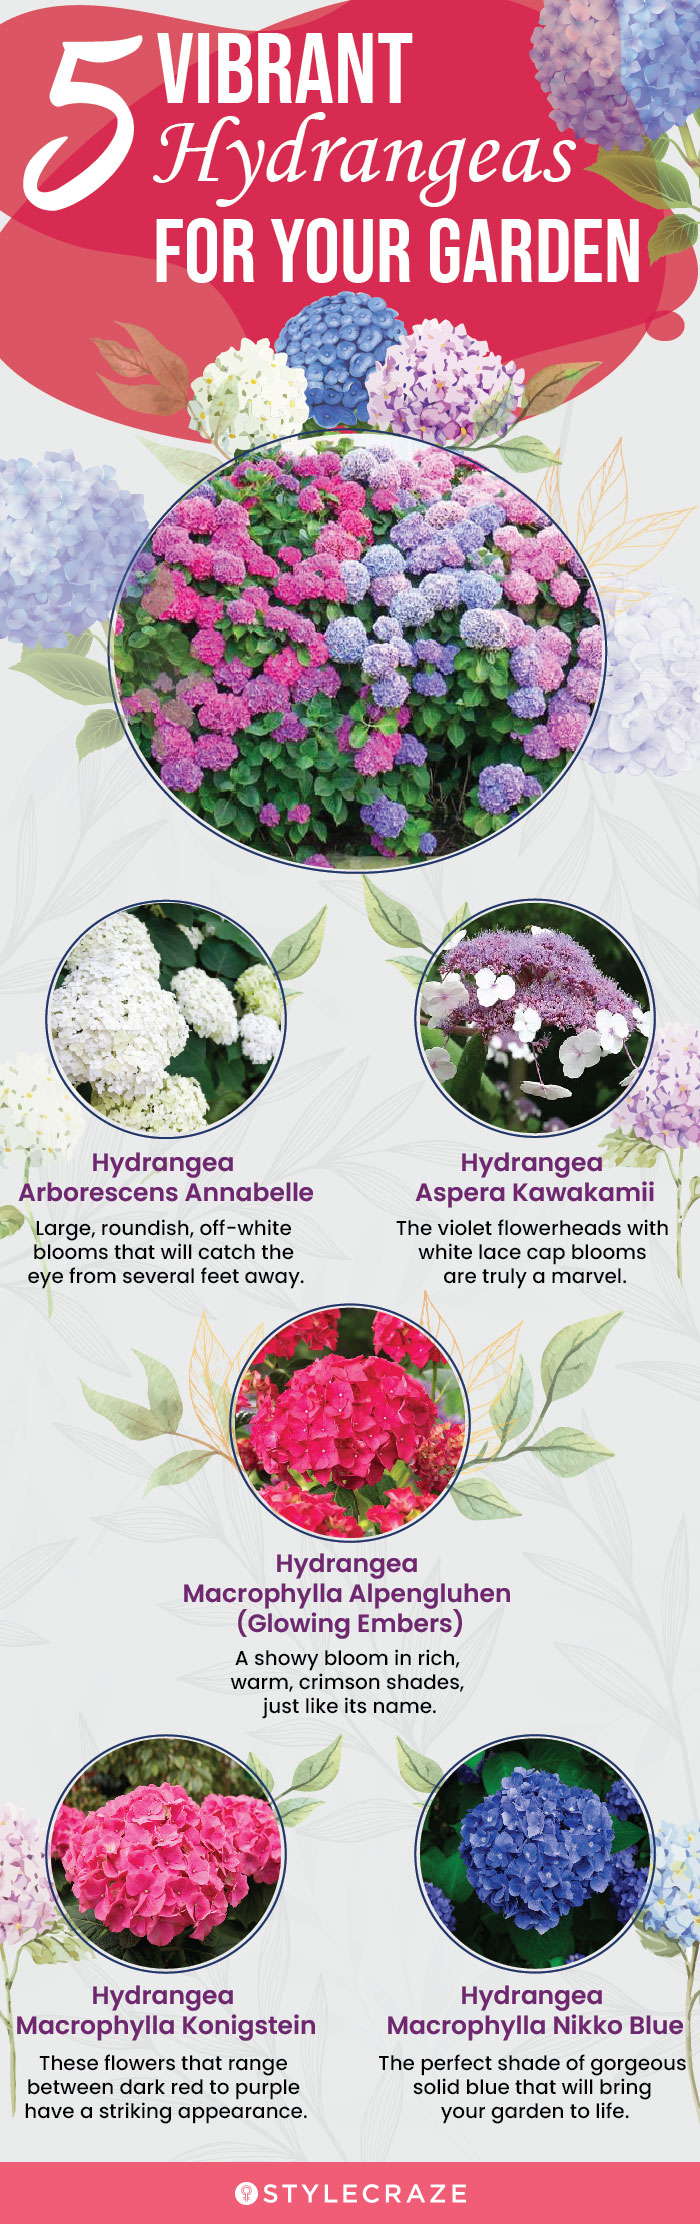 5 vibrant hydrangeas for your garden (infographic)